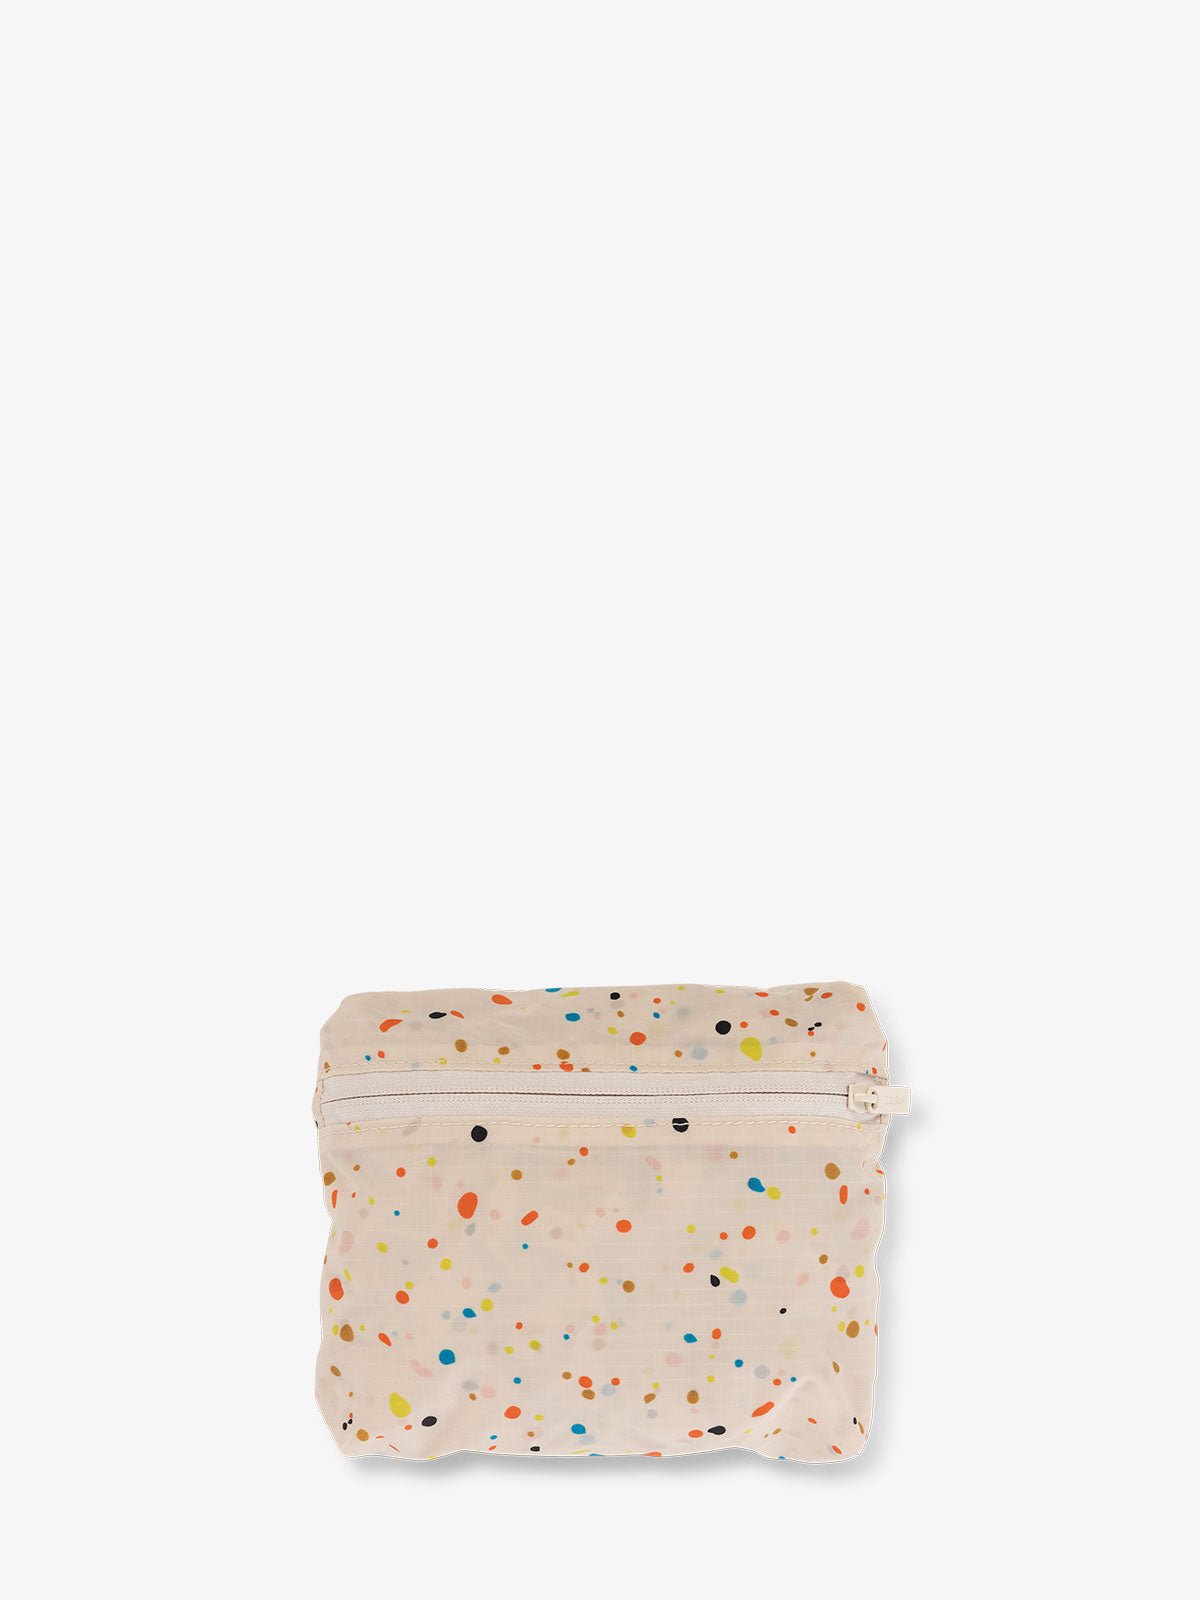 CALPAK Compakt foldable tote bag in speckle